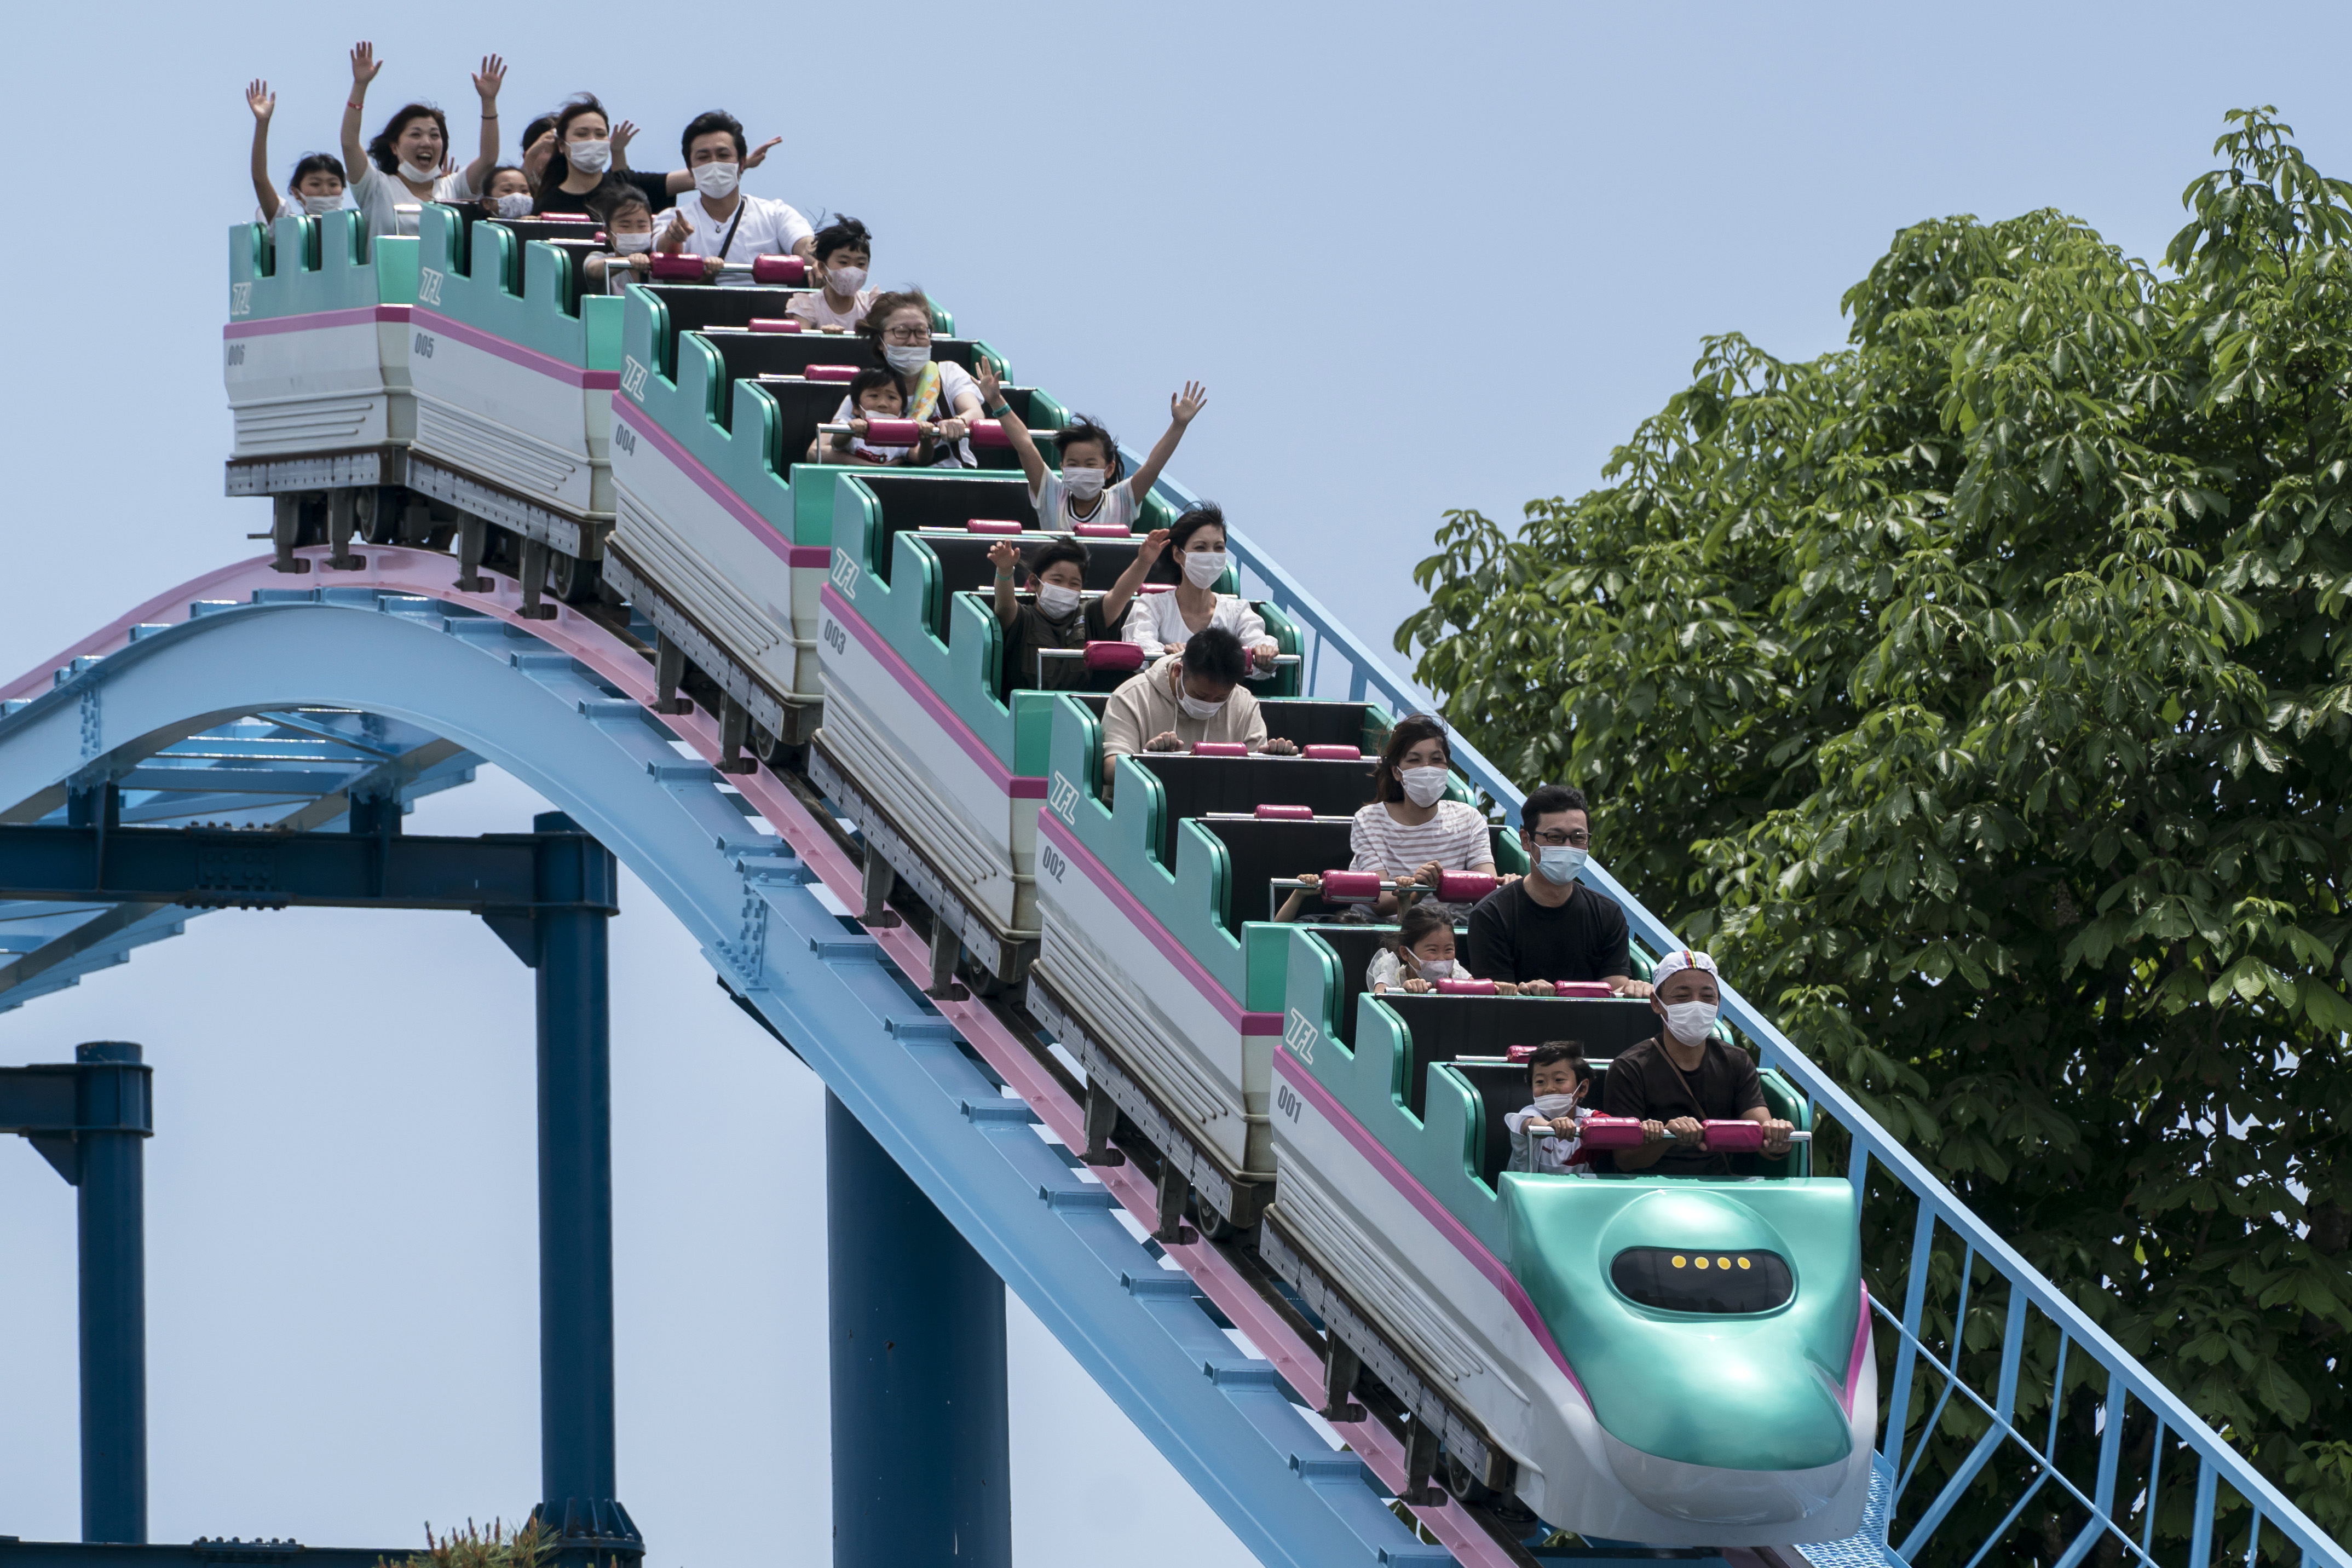 Visitors wearing face masks ride a roller coaster at the Tochinoki Family Land amusement park on May 17, 2020 in Utsunomiya, Tochigi, Japan